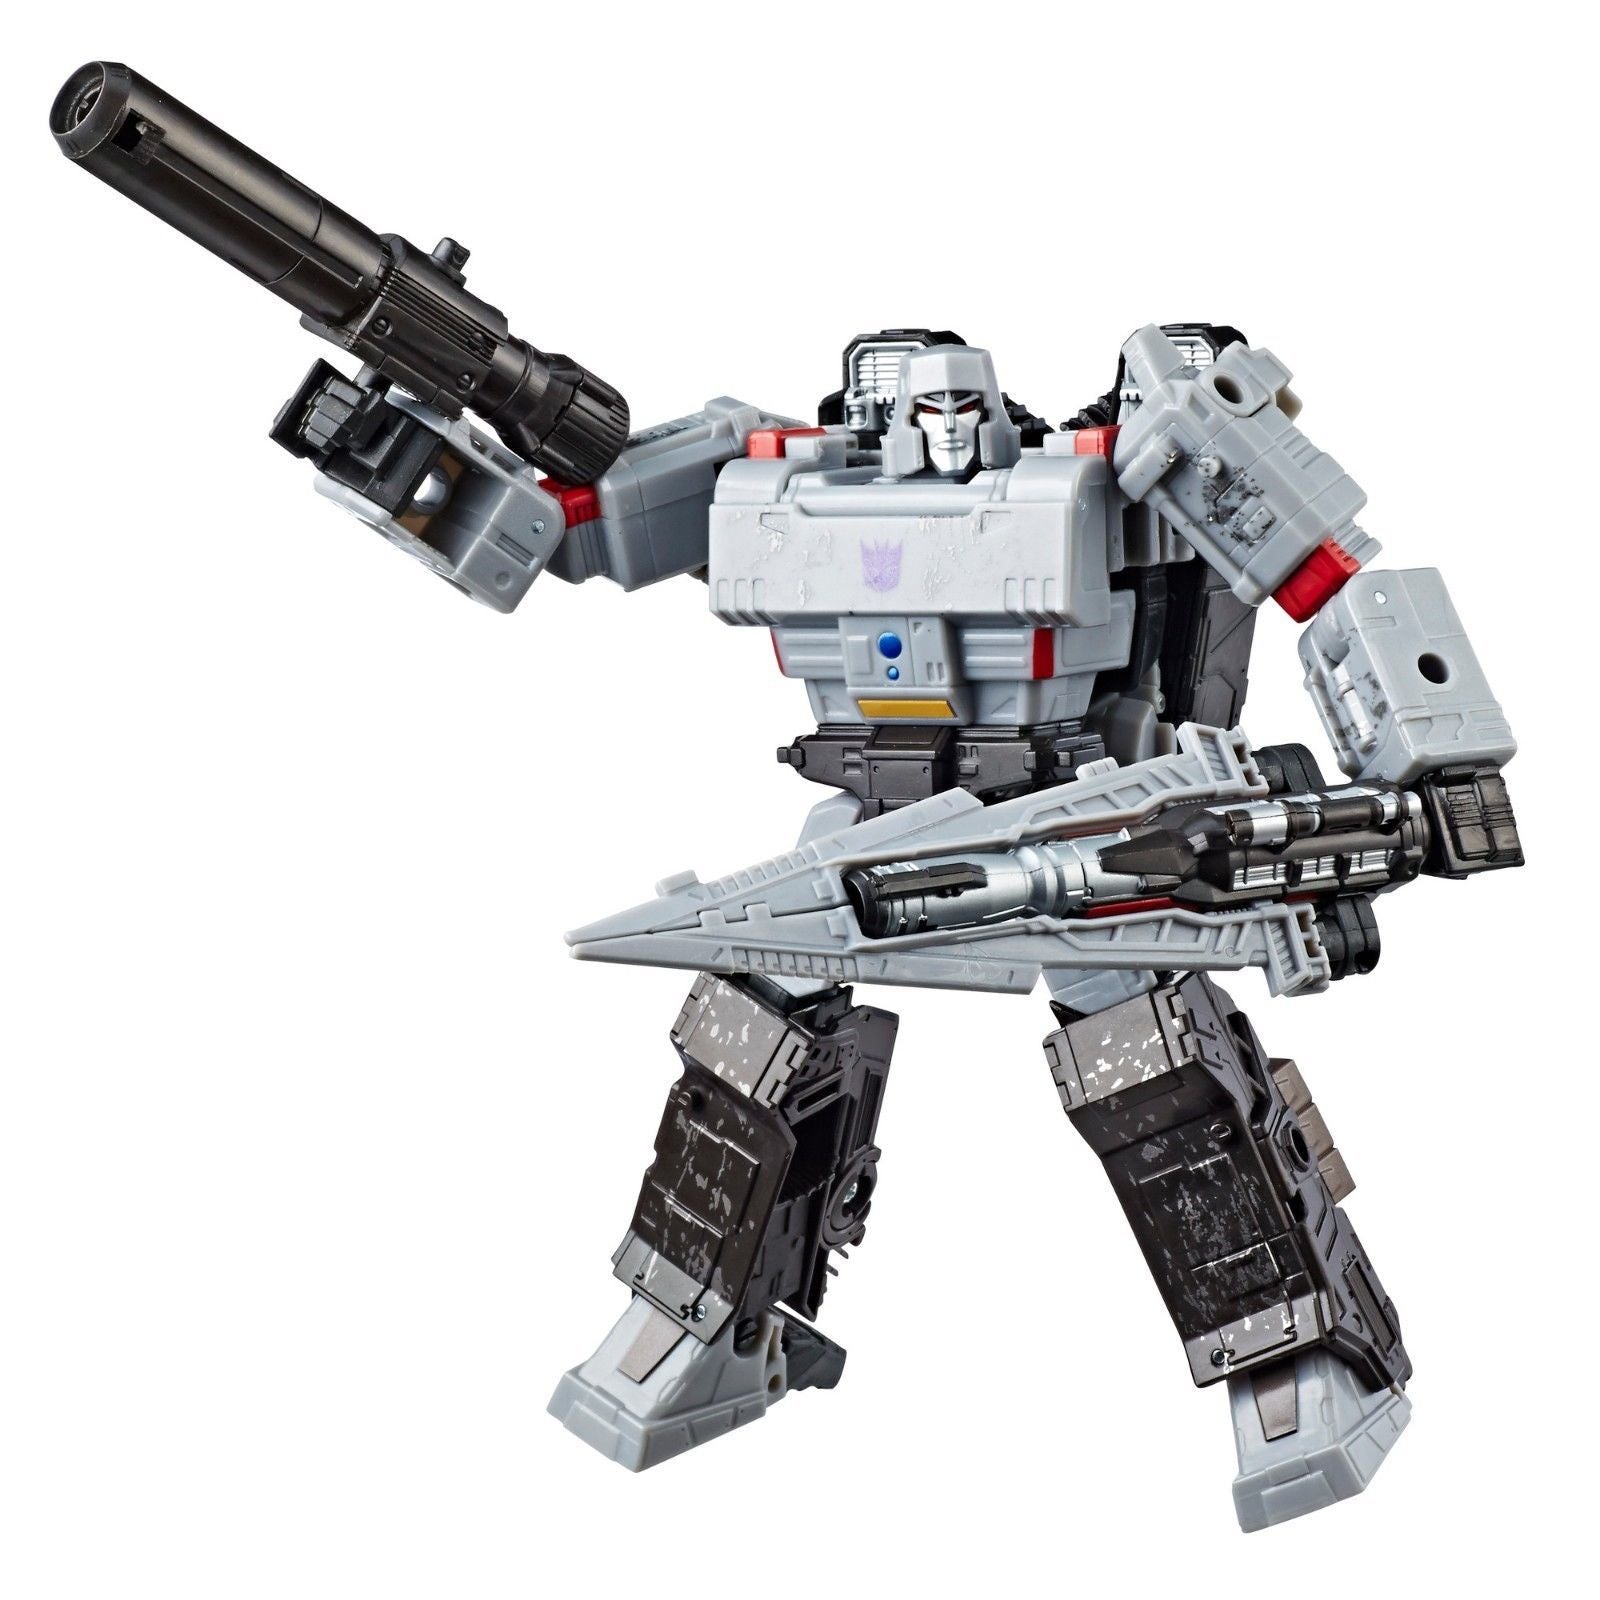 Transformers Generations War For Cybertron: Siege Voyager Megatron Action Figure WFC-S12